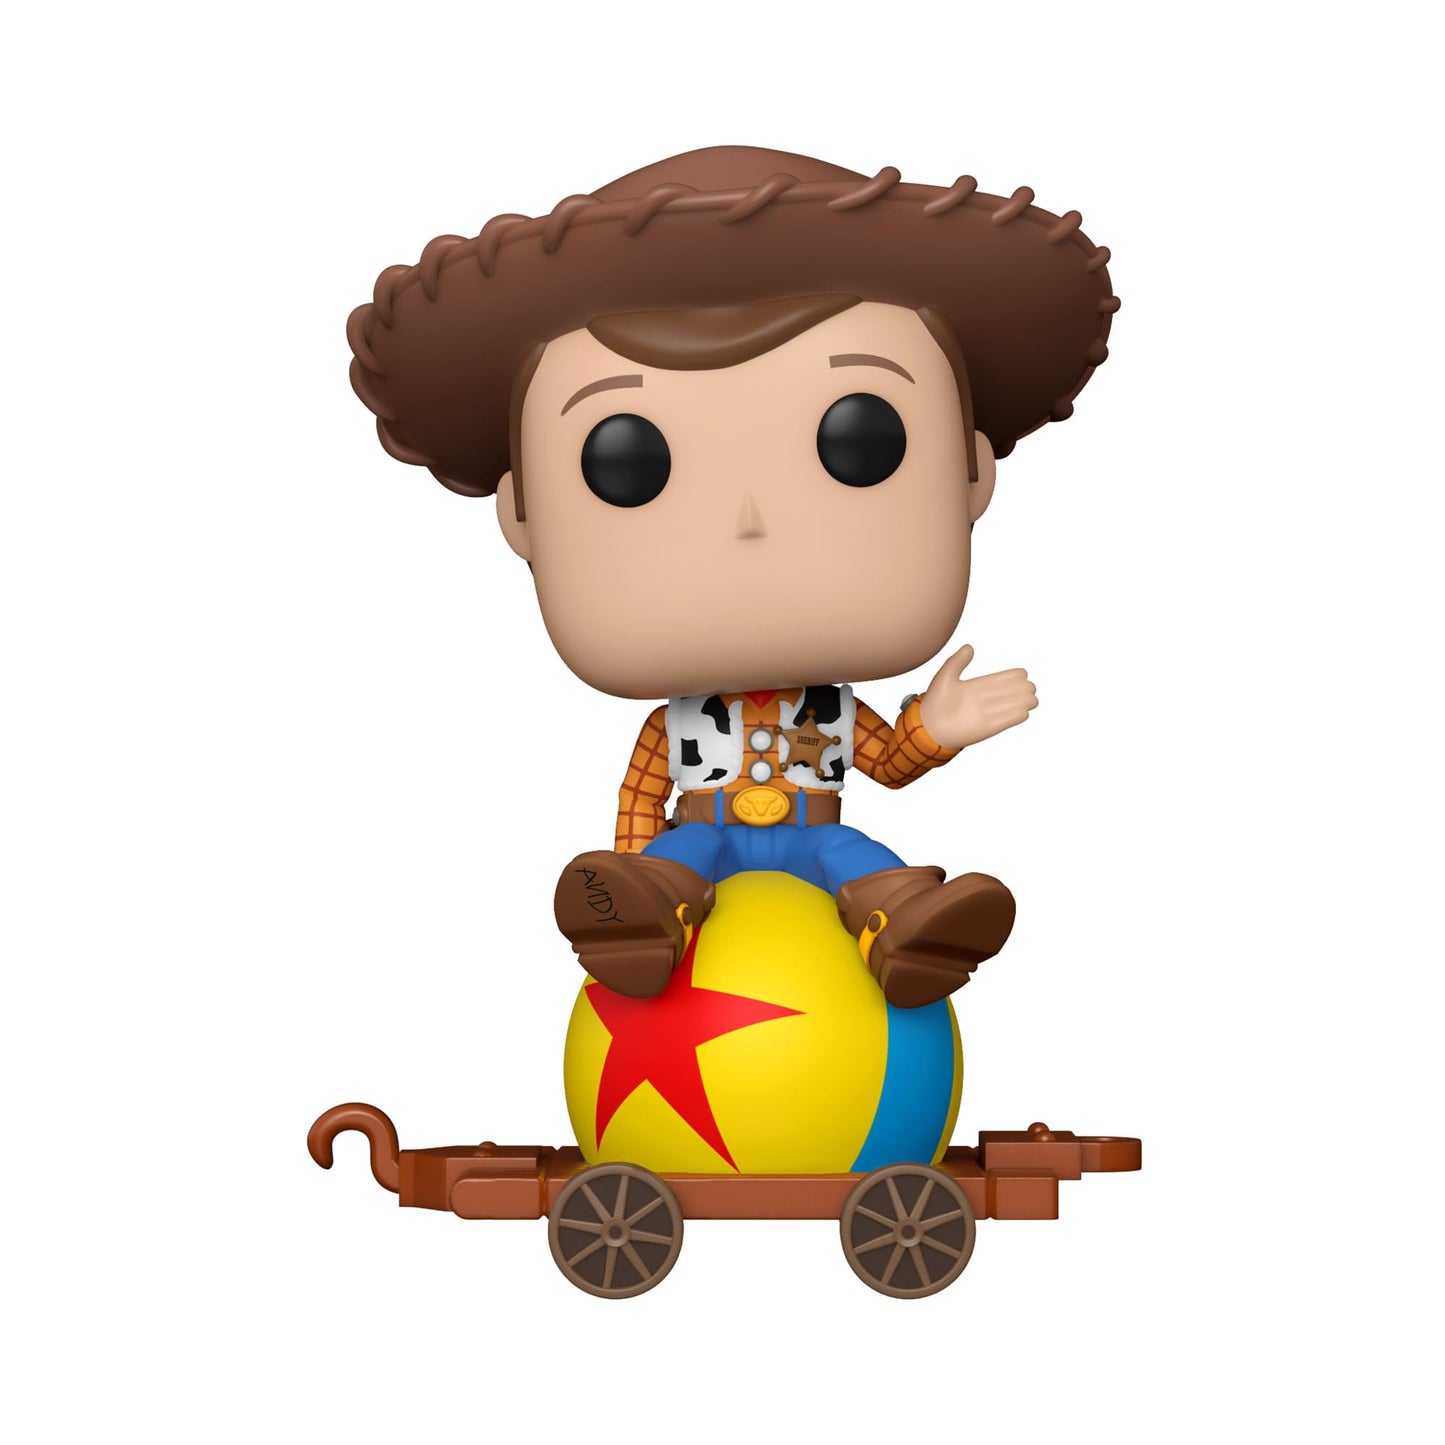 Funko Pop! Train: Disney 100 - Woody on Luxo Ball, Woody, Amazon Exclusive - amzGamess